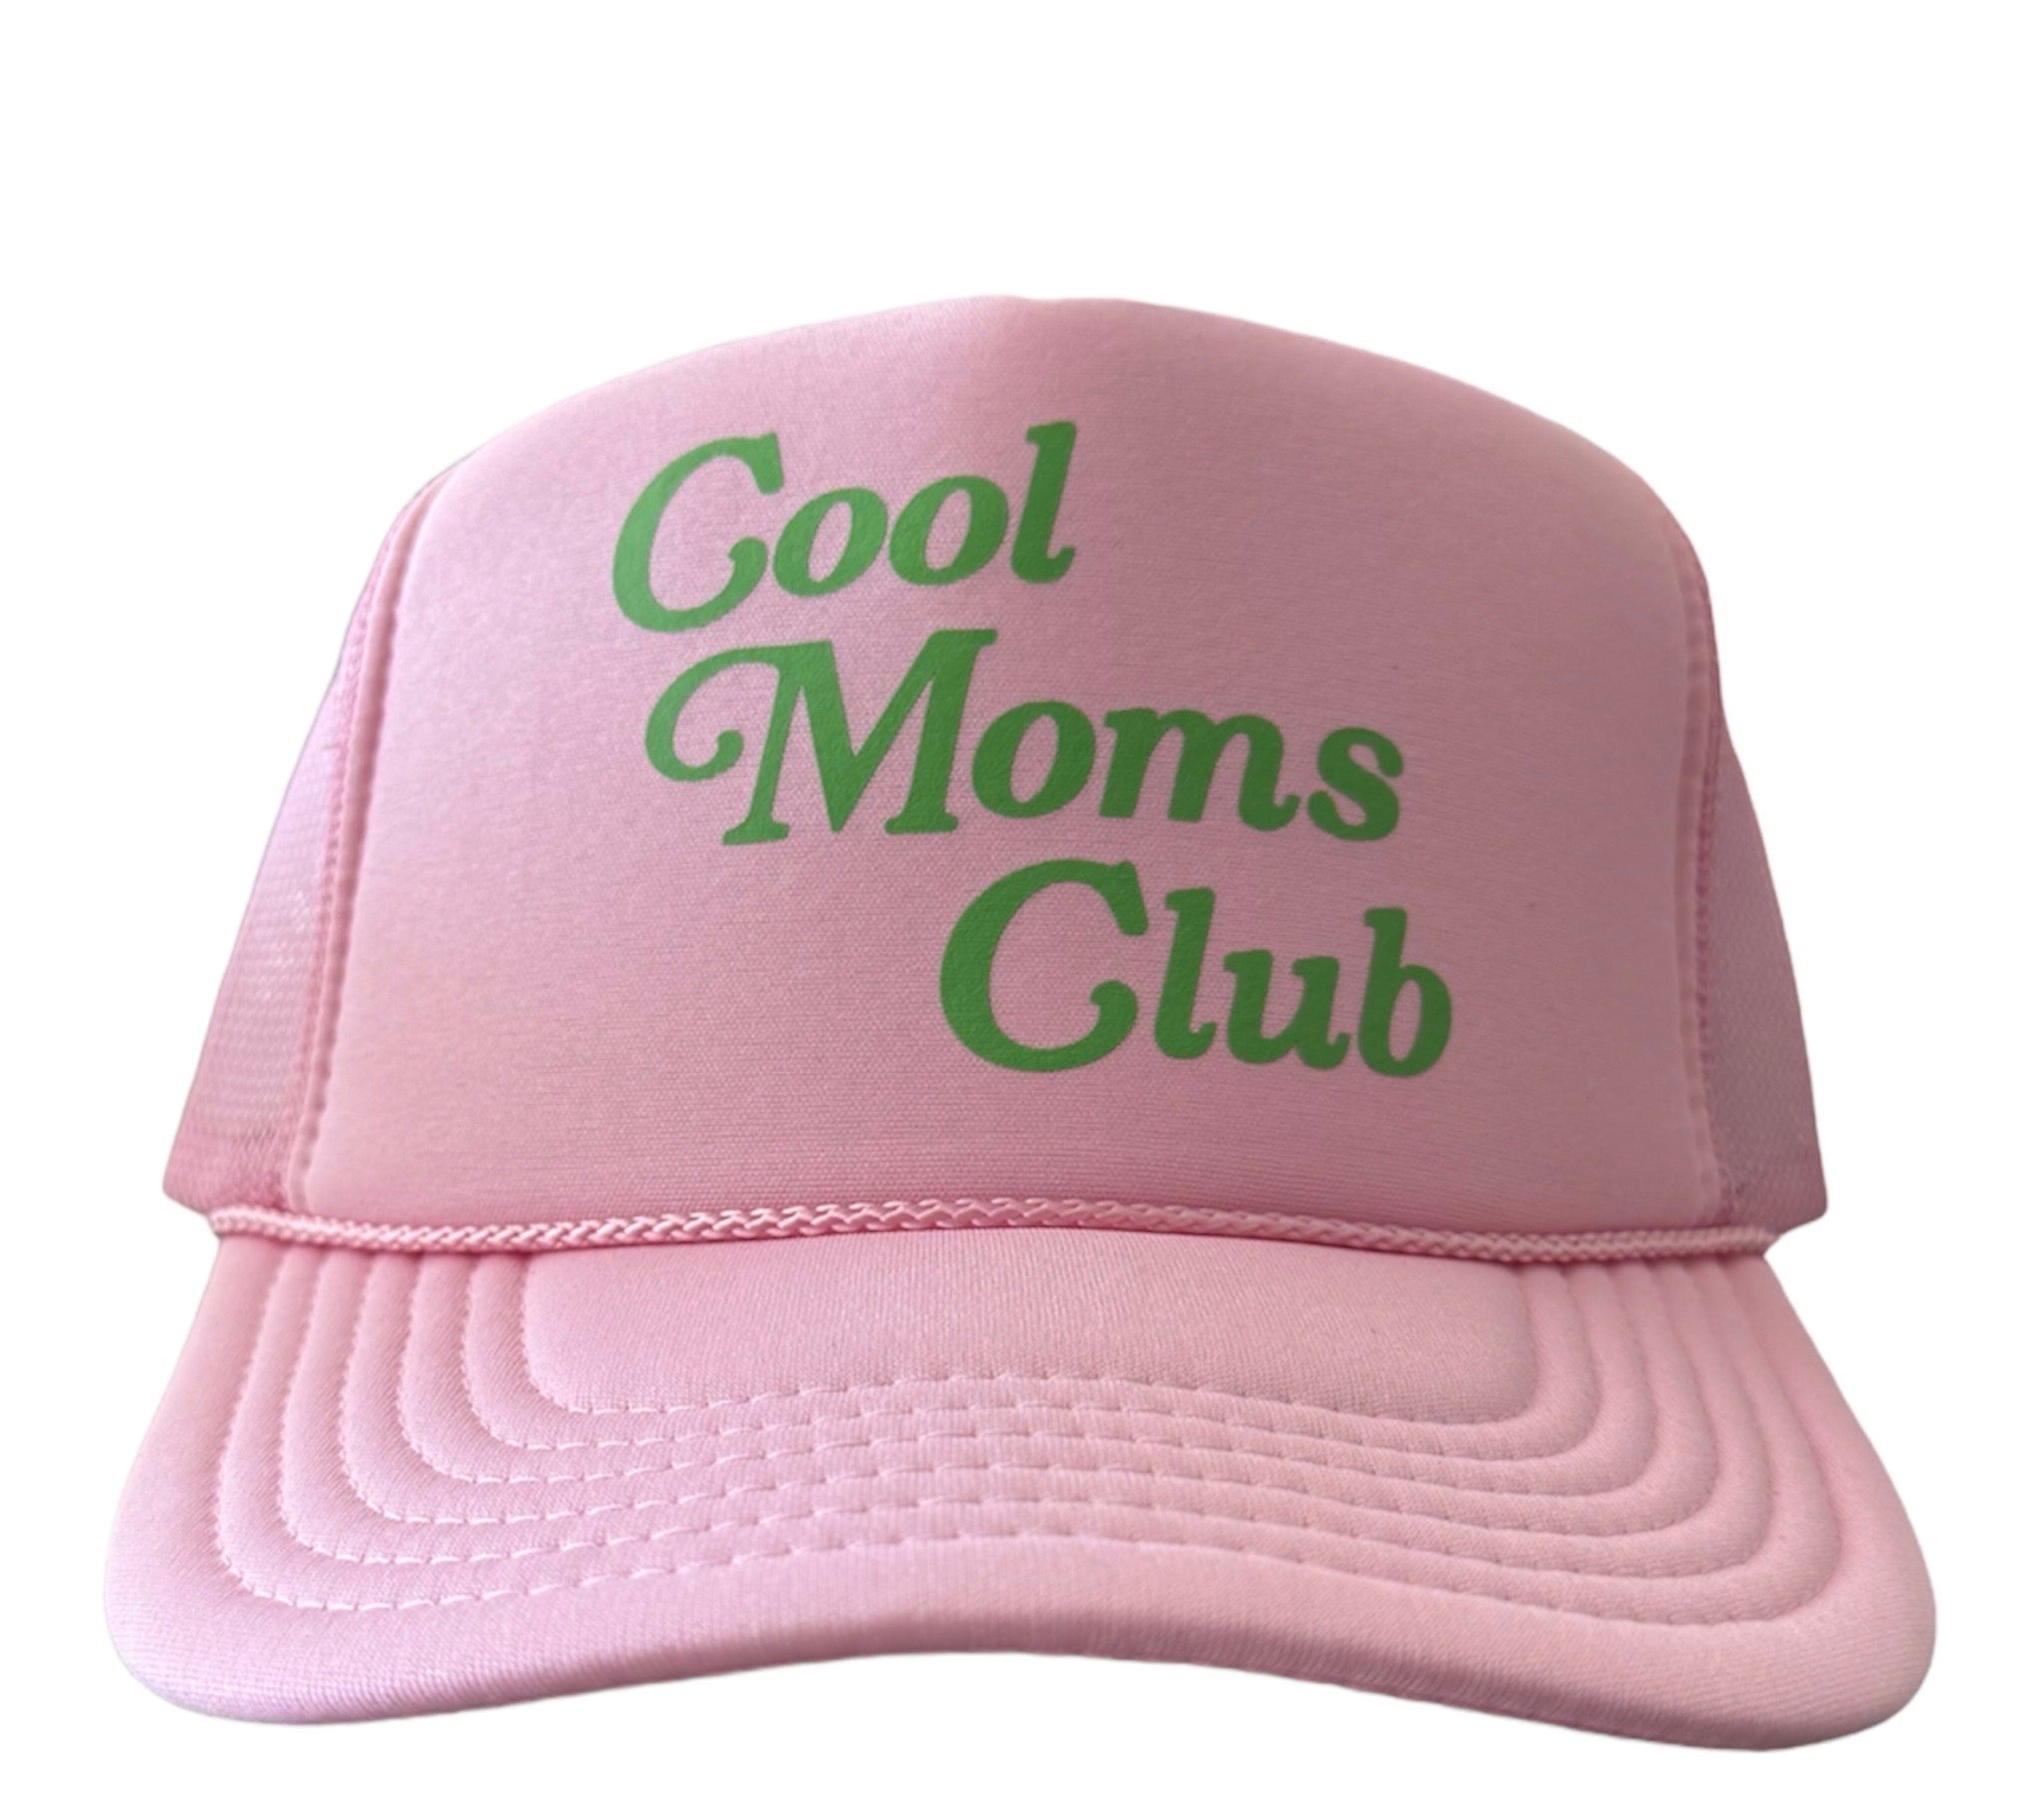 “Cool Moms Club” Trucker Hat - Pink/Green